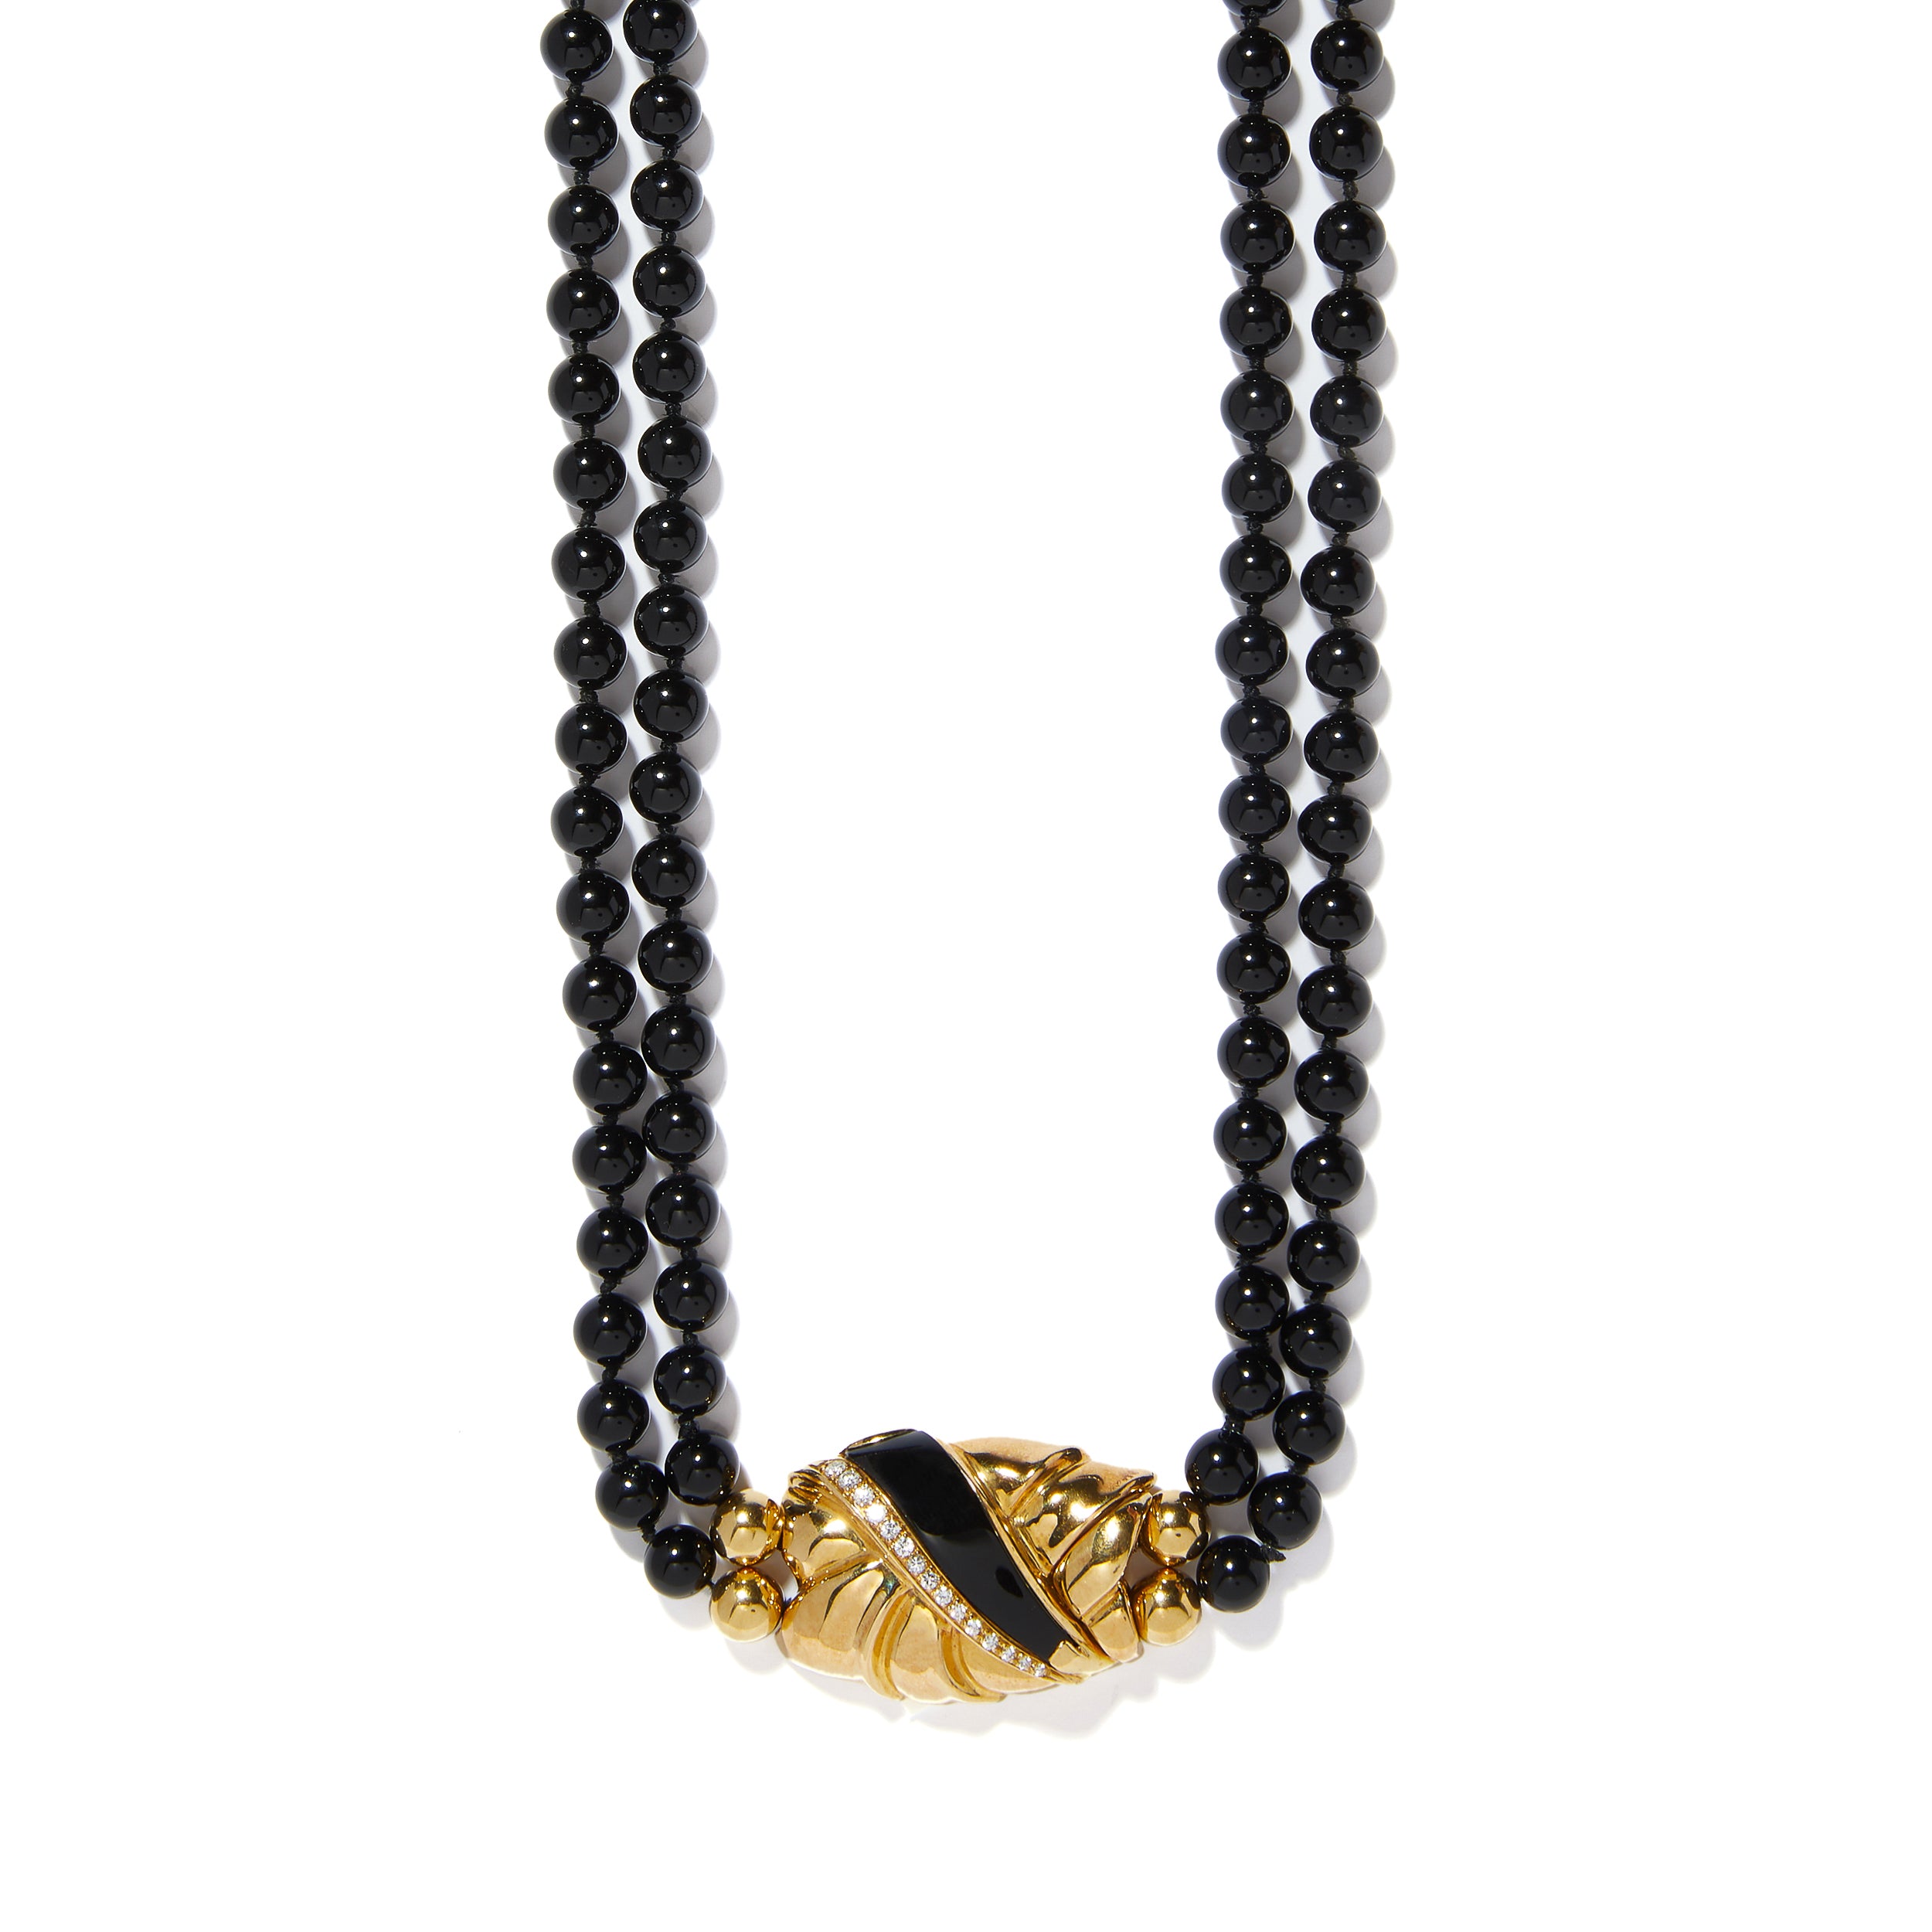 Collier de perles d'onyx noir double brin avec fermoir en or 18 carats